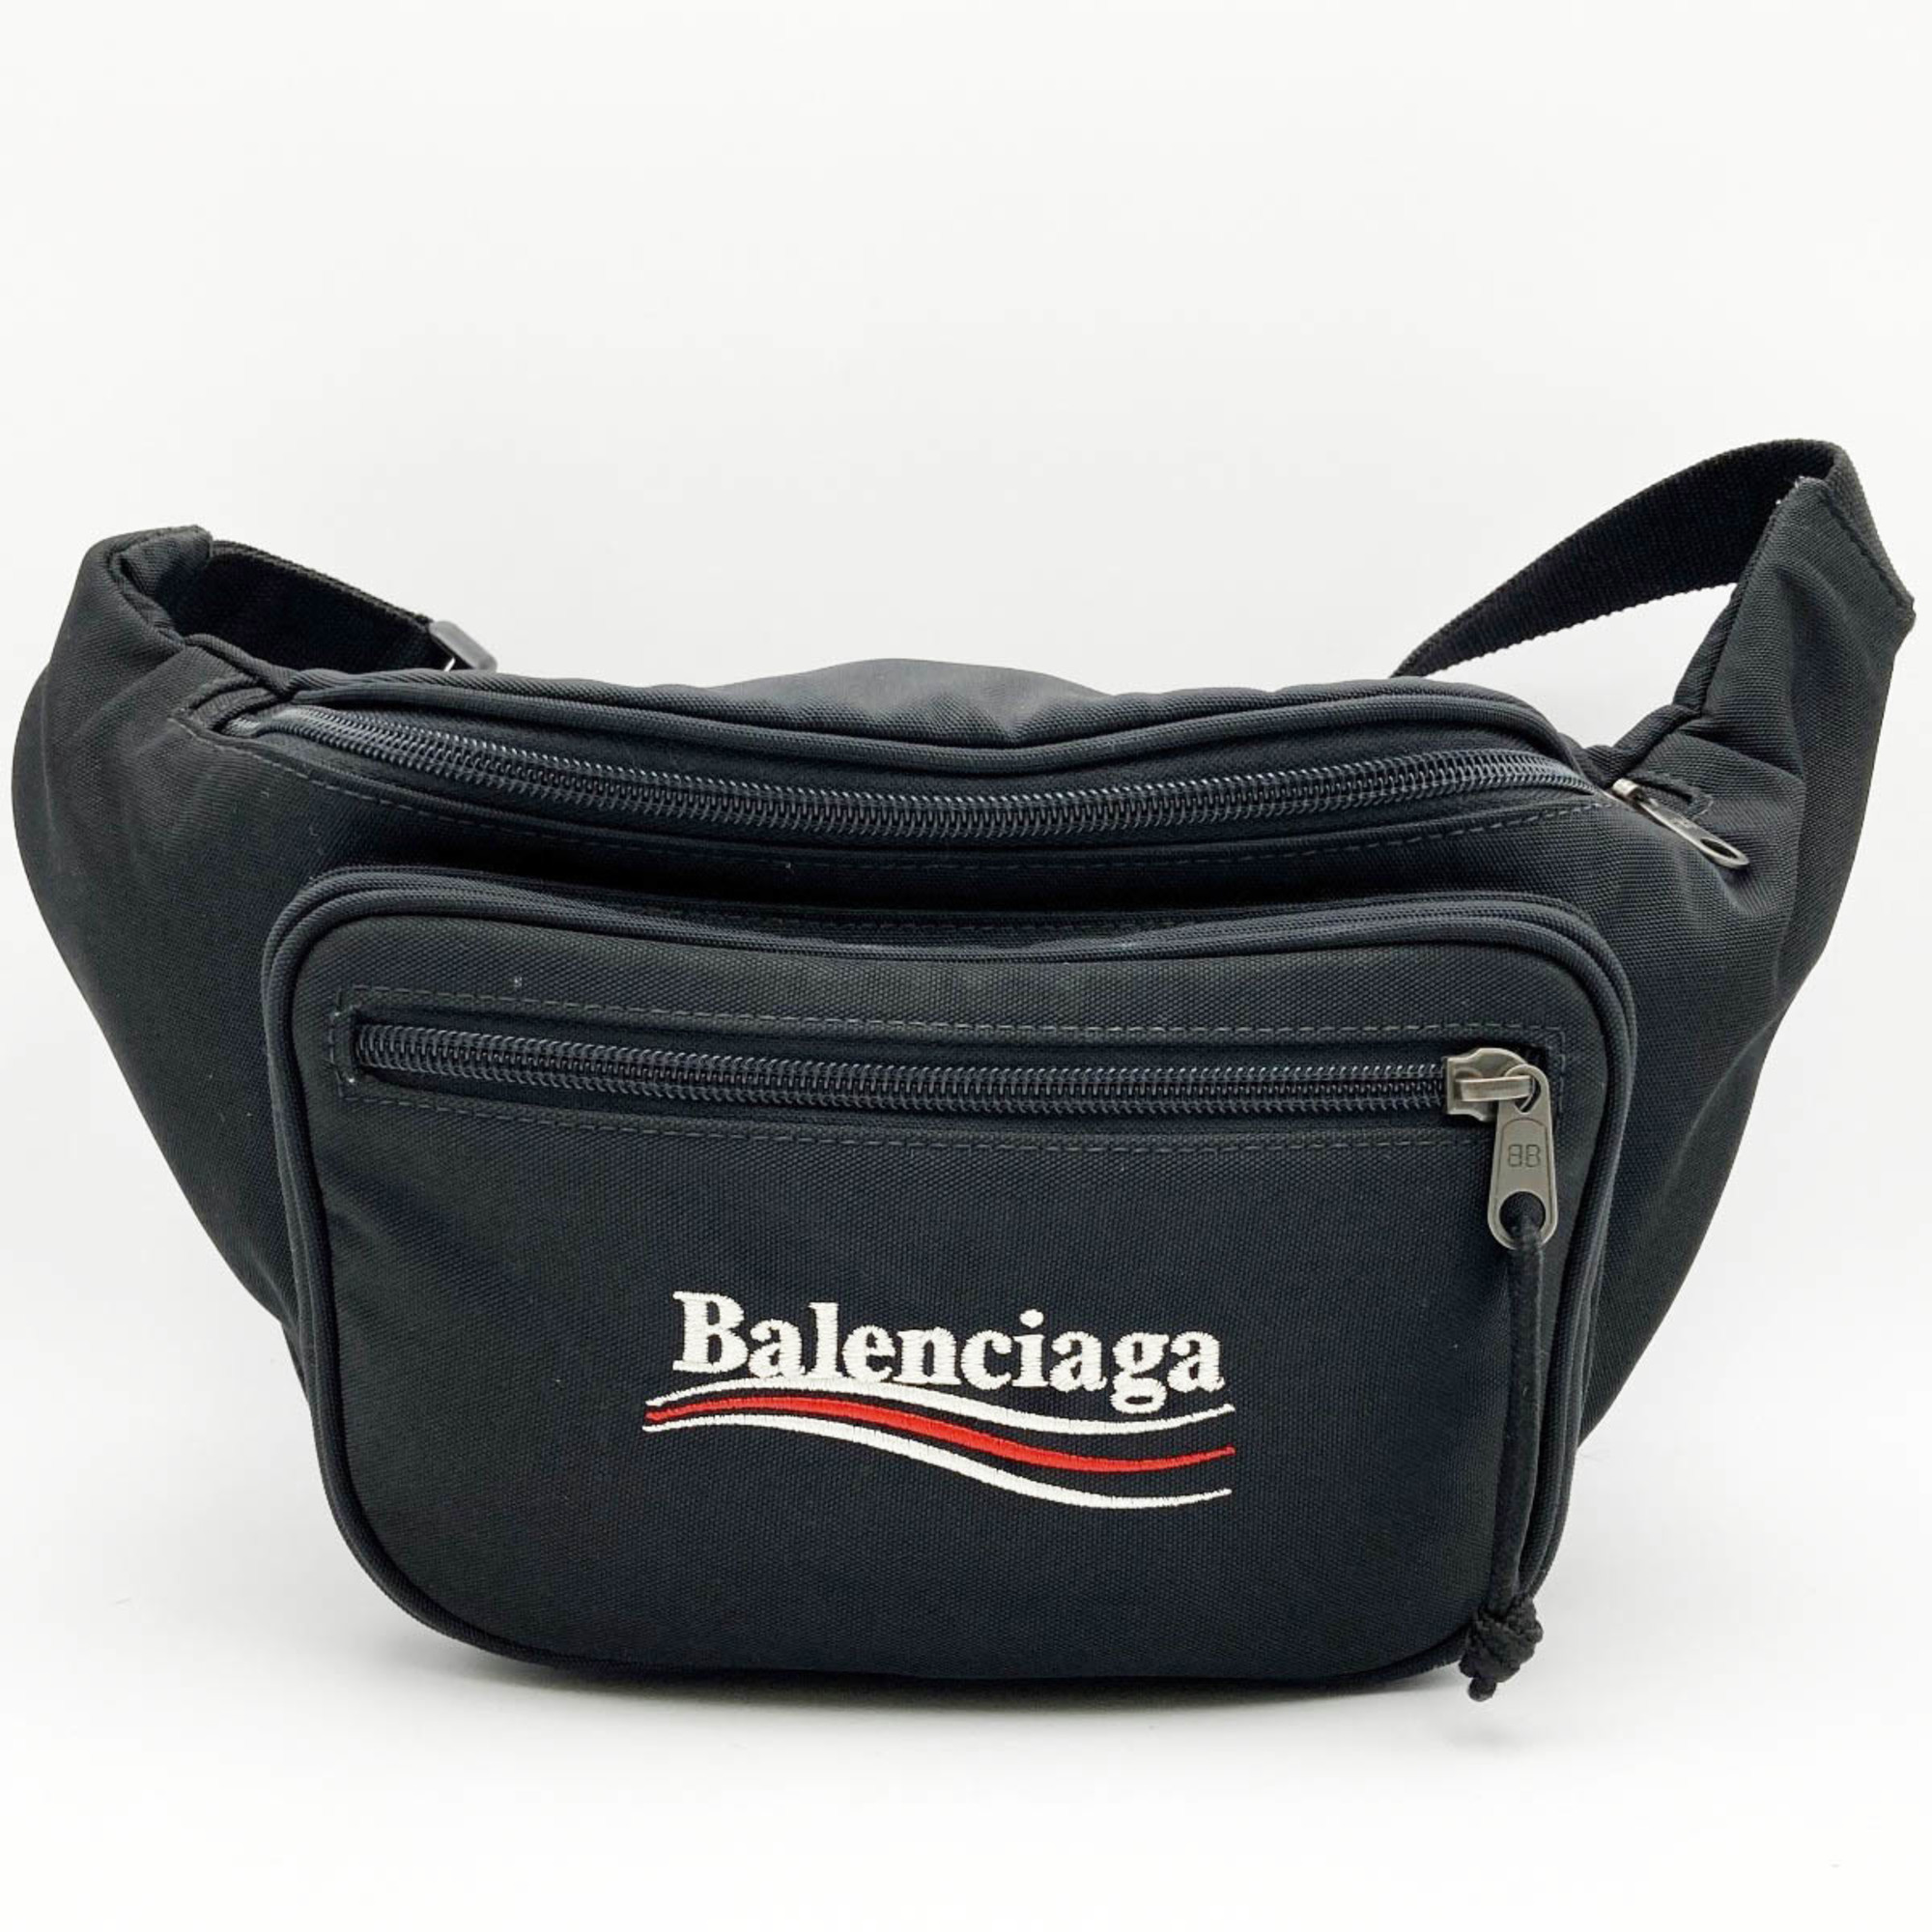 BALENCIAGA Balenciaga body bag shoulder black nylon men's women's fashion brand USED